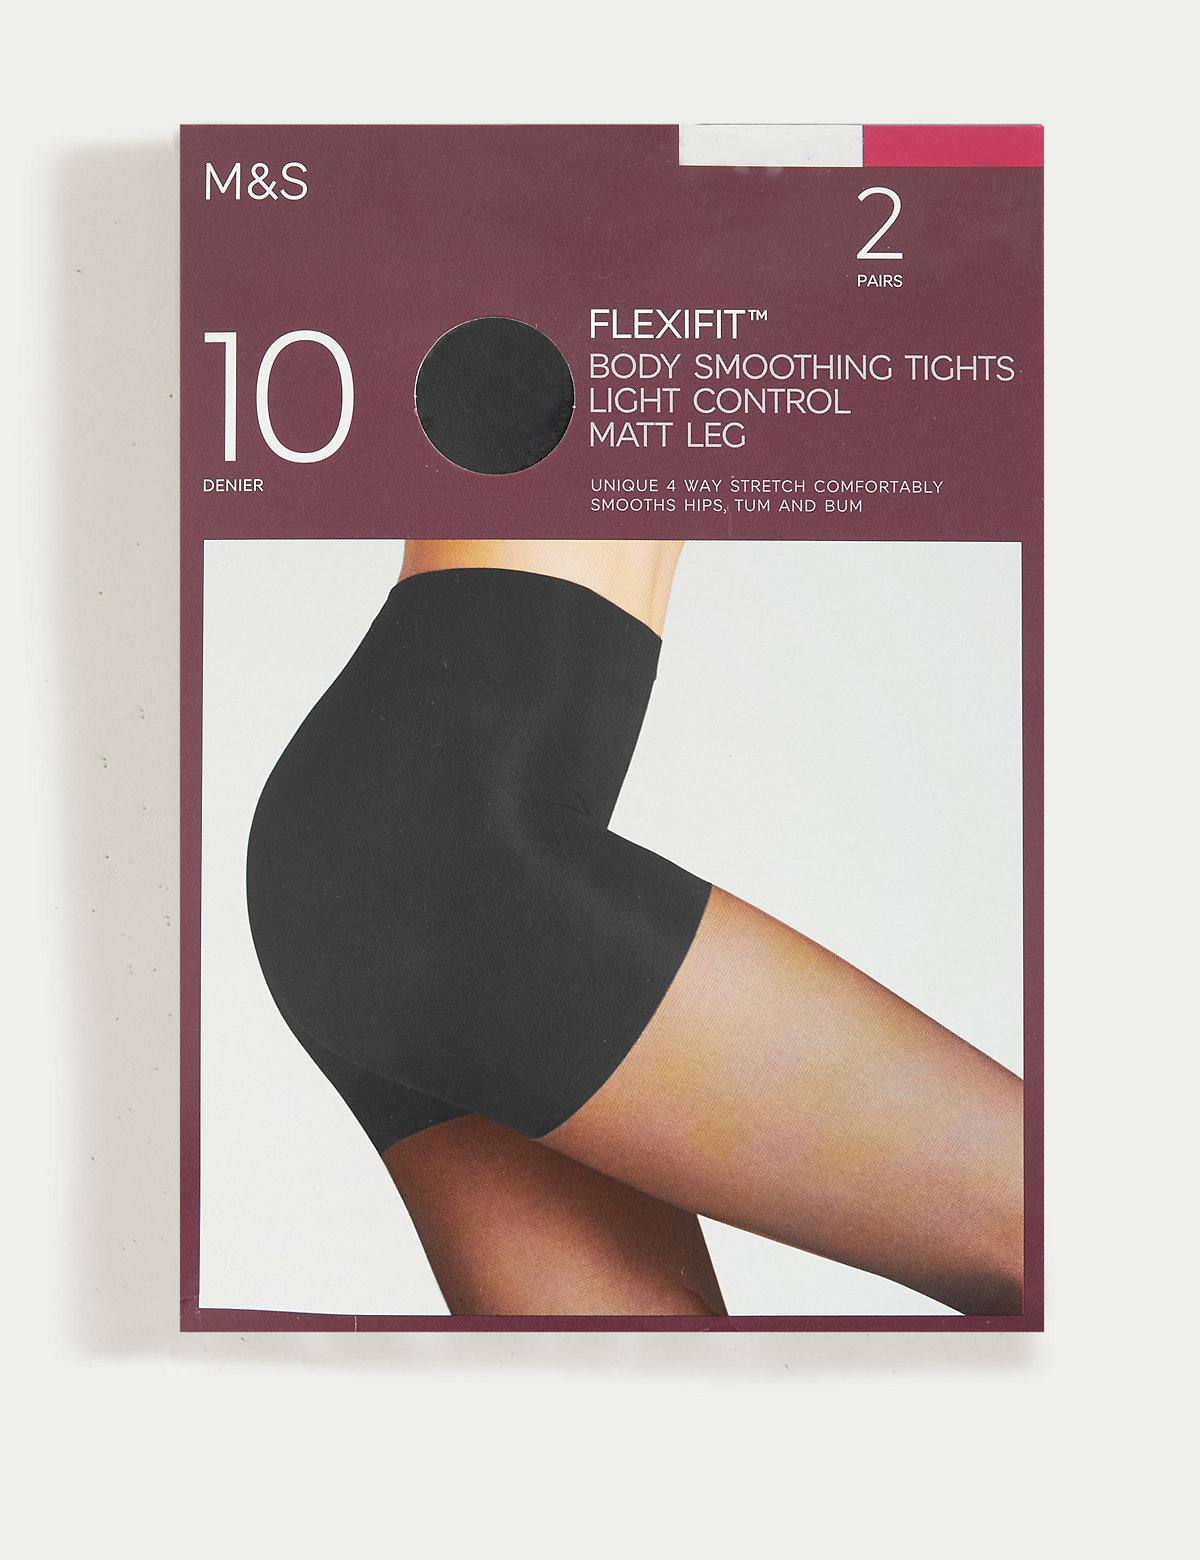 Flexifit™ 10 Denier Light Control Tights